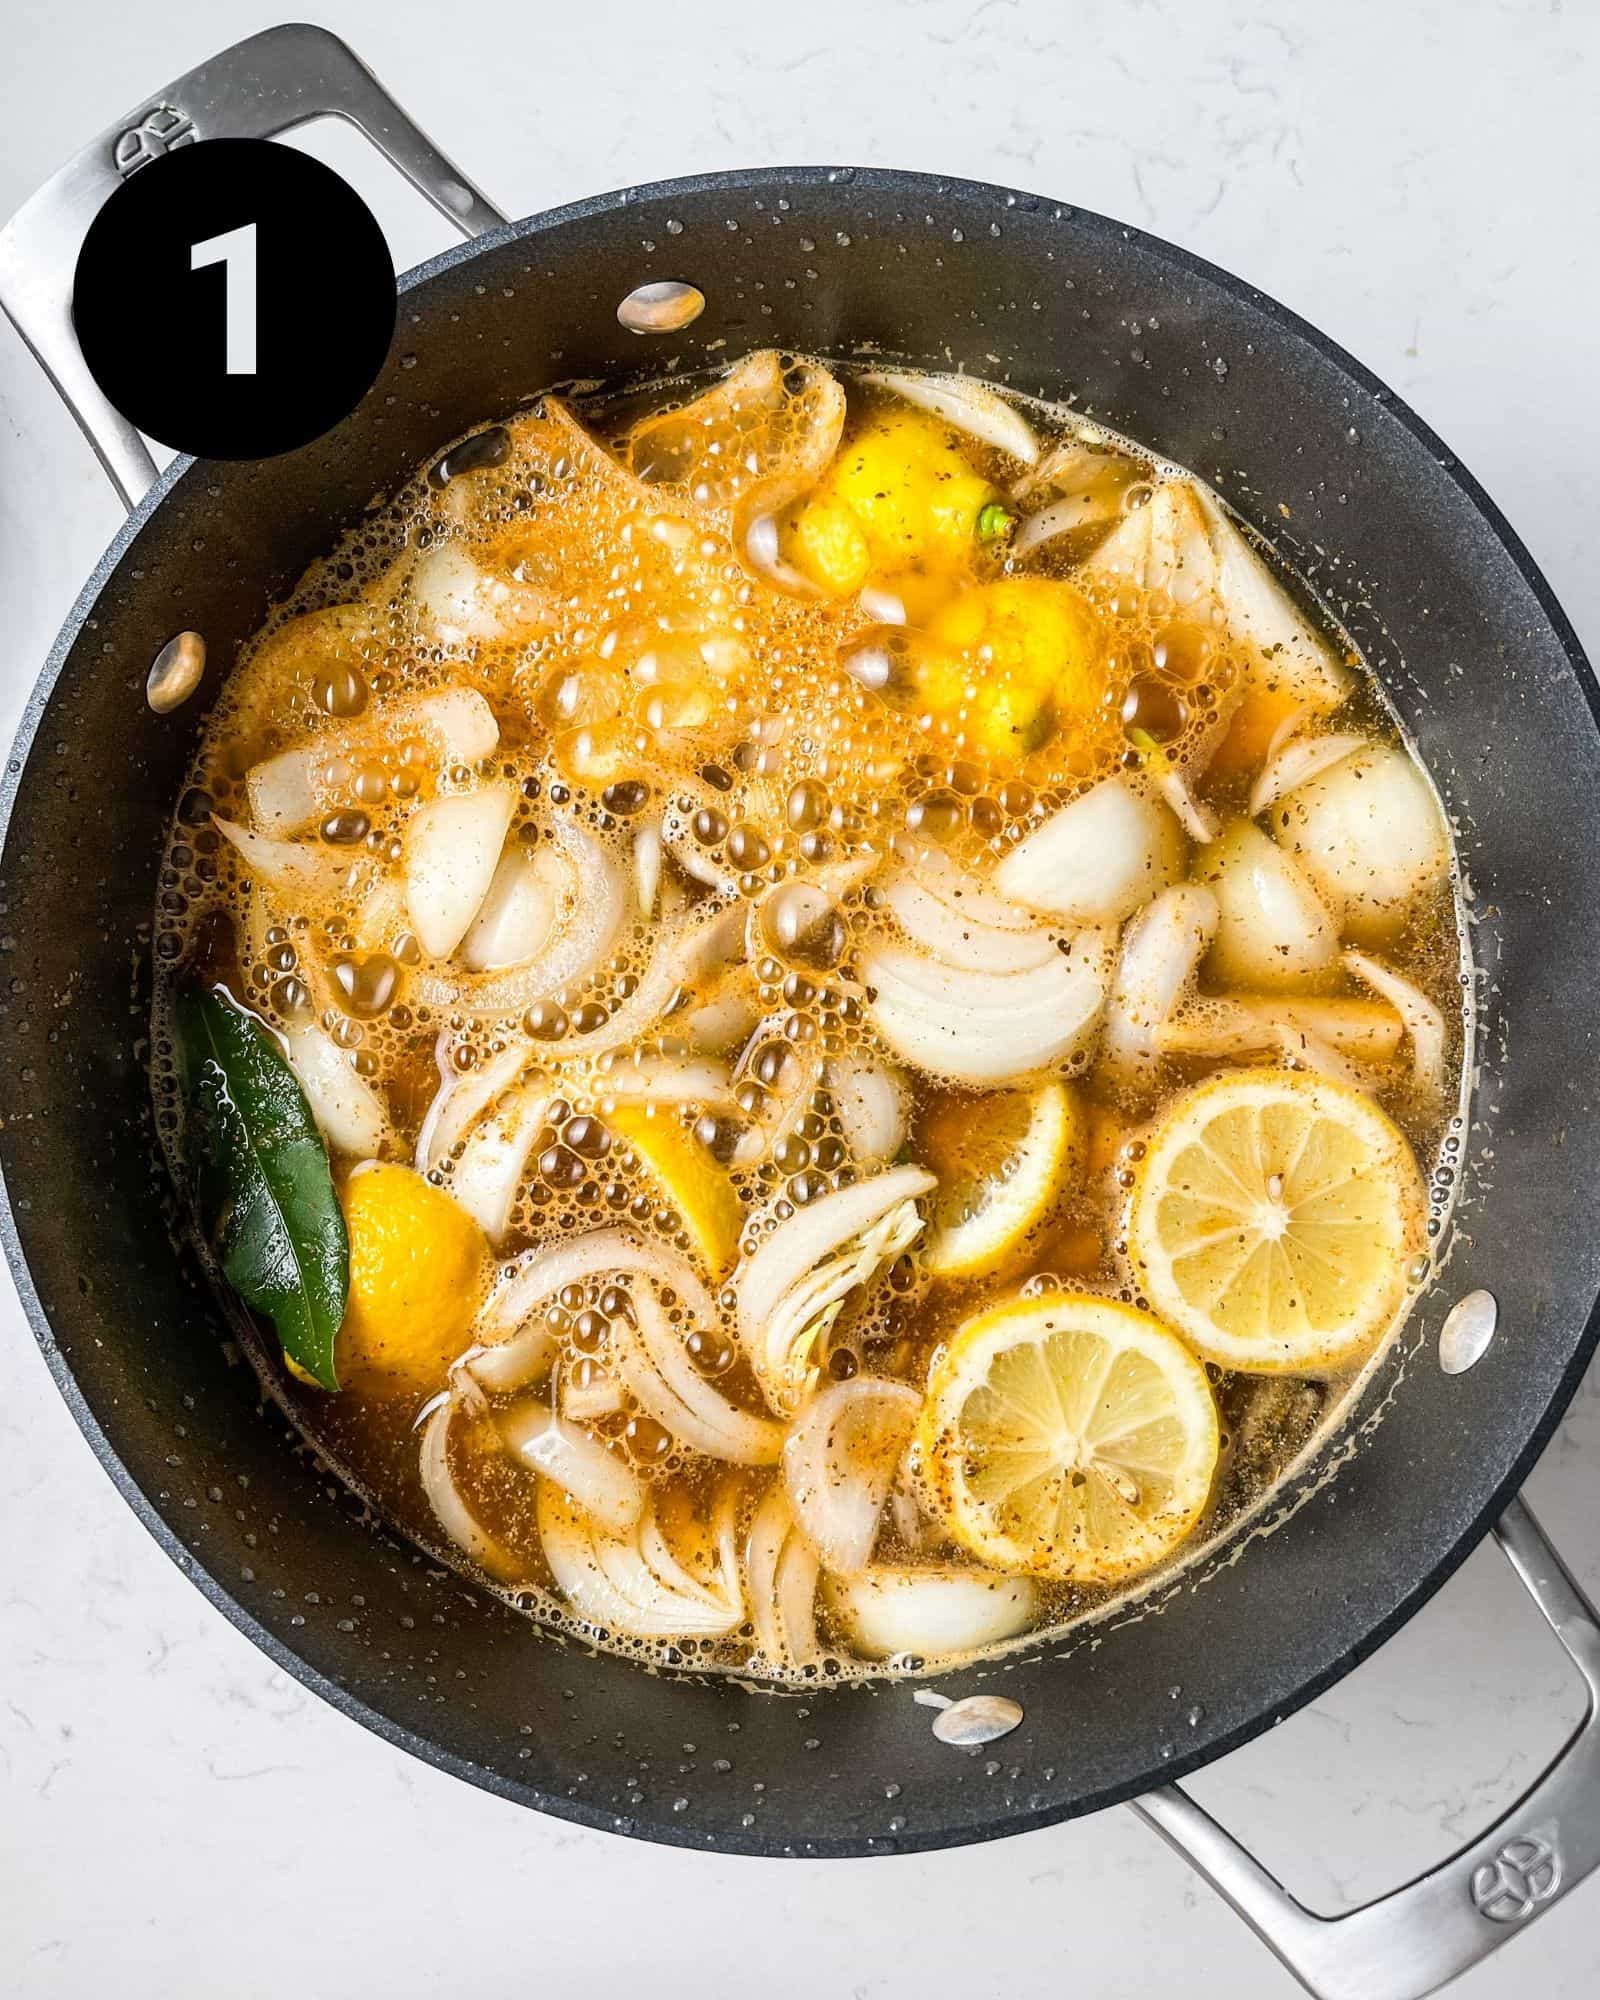 garlic, chicken broth, onions, lemons, bay leaves, and seasonings in a large pot.